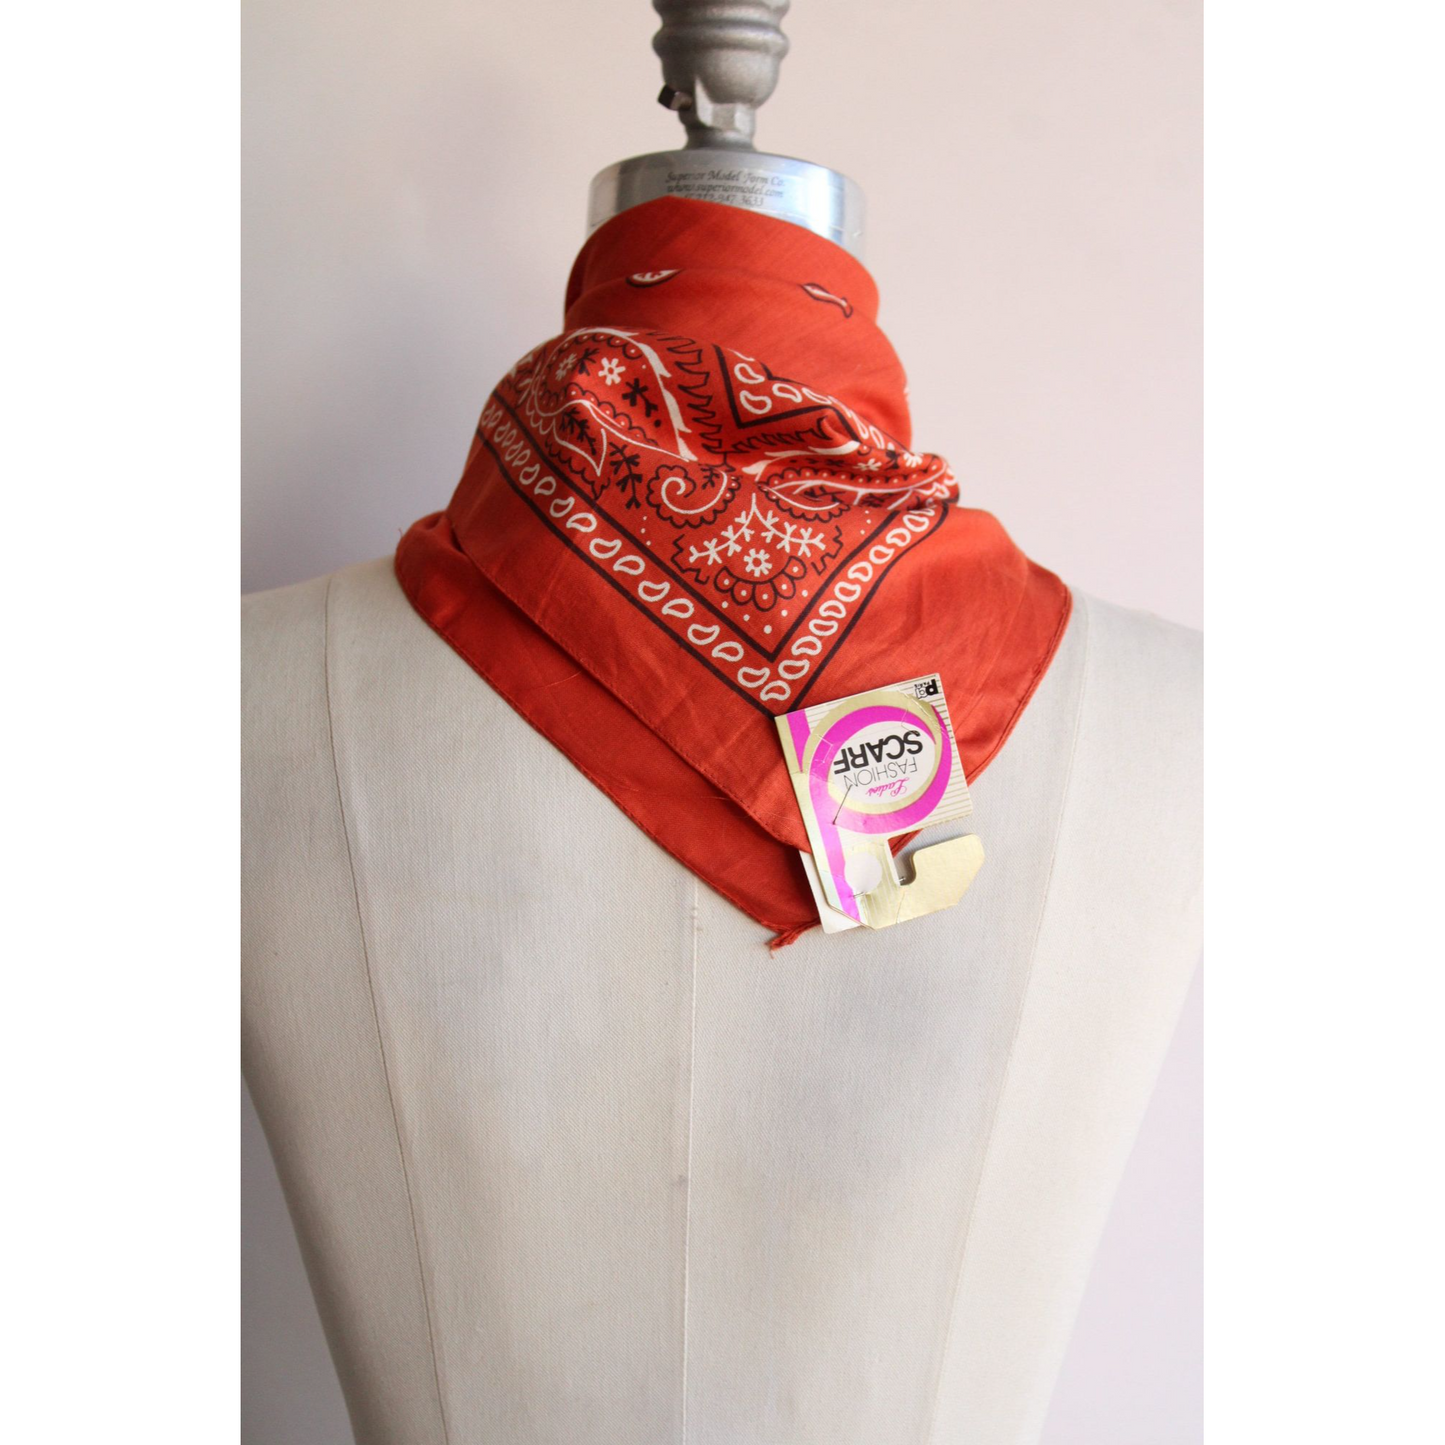 Vintage 1980s Bandana / Brick Red Cotton Scarf / Western Style Kerchief